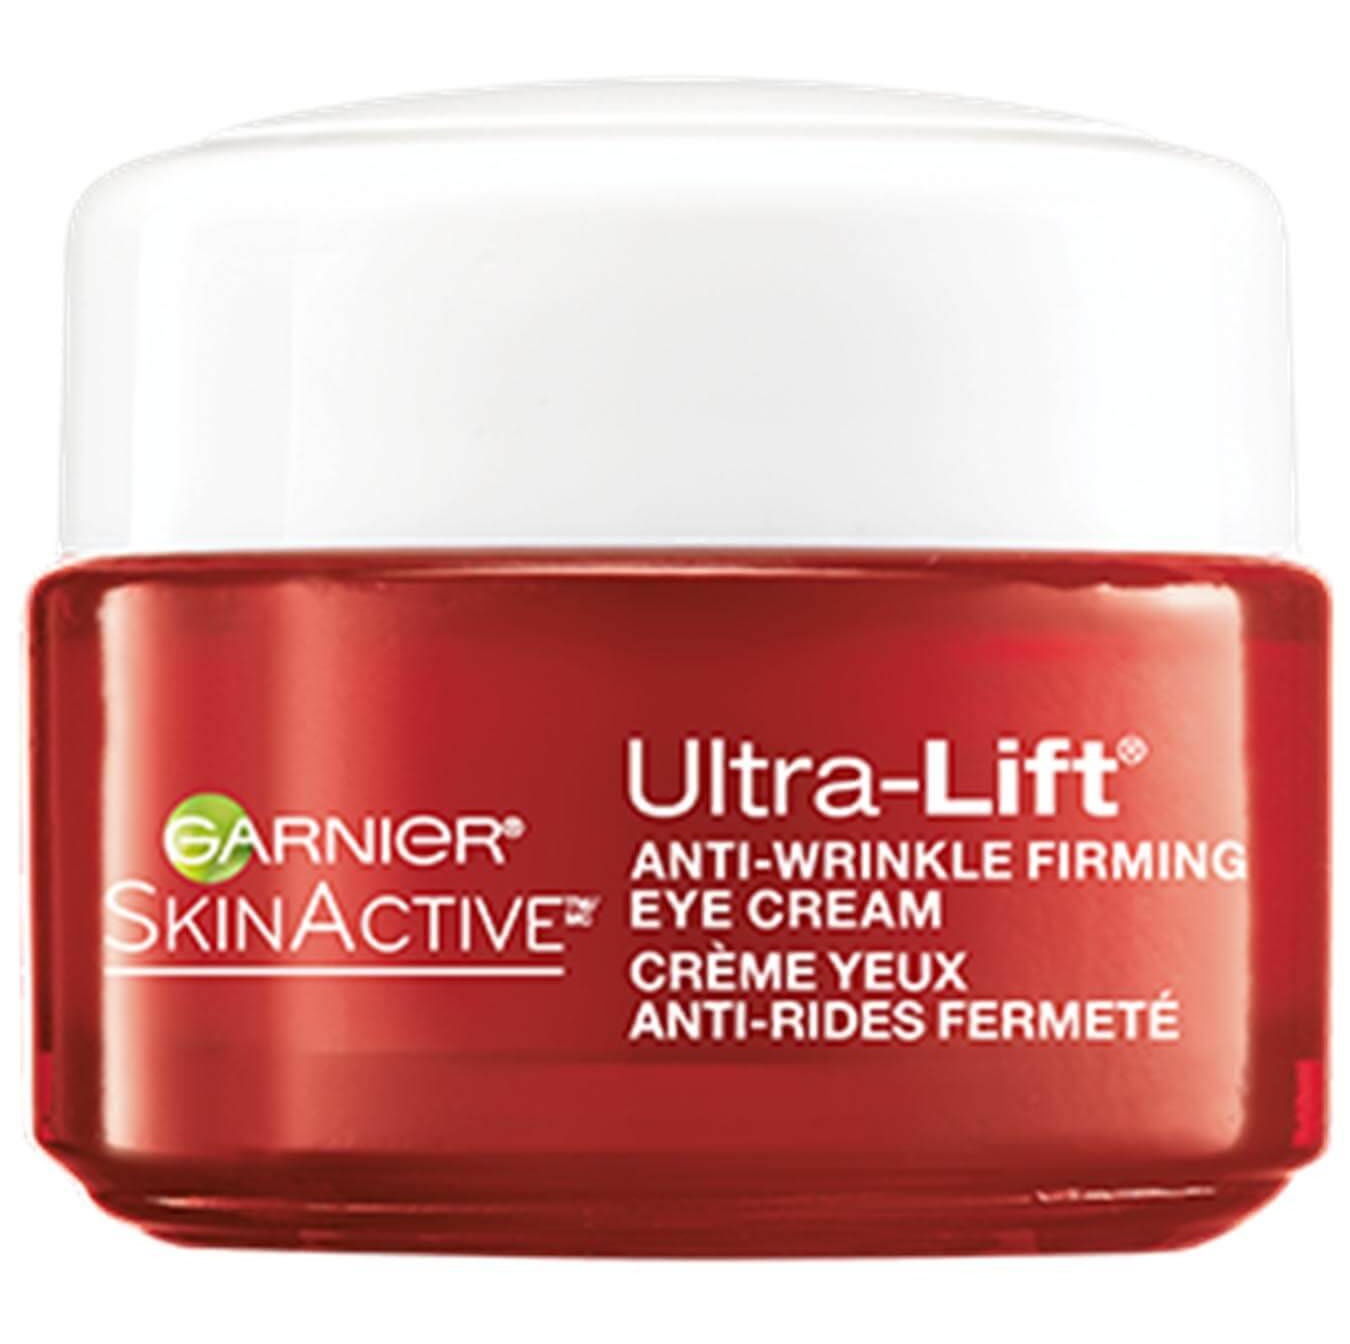 Garnier Skin Active Ultra-Lift Anti-Wrinkle Firming Eye Cream